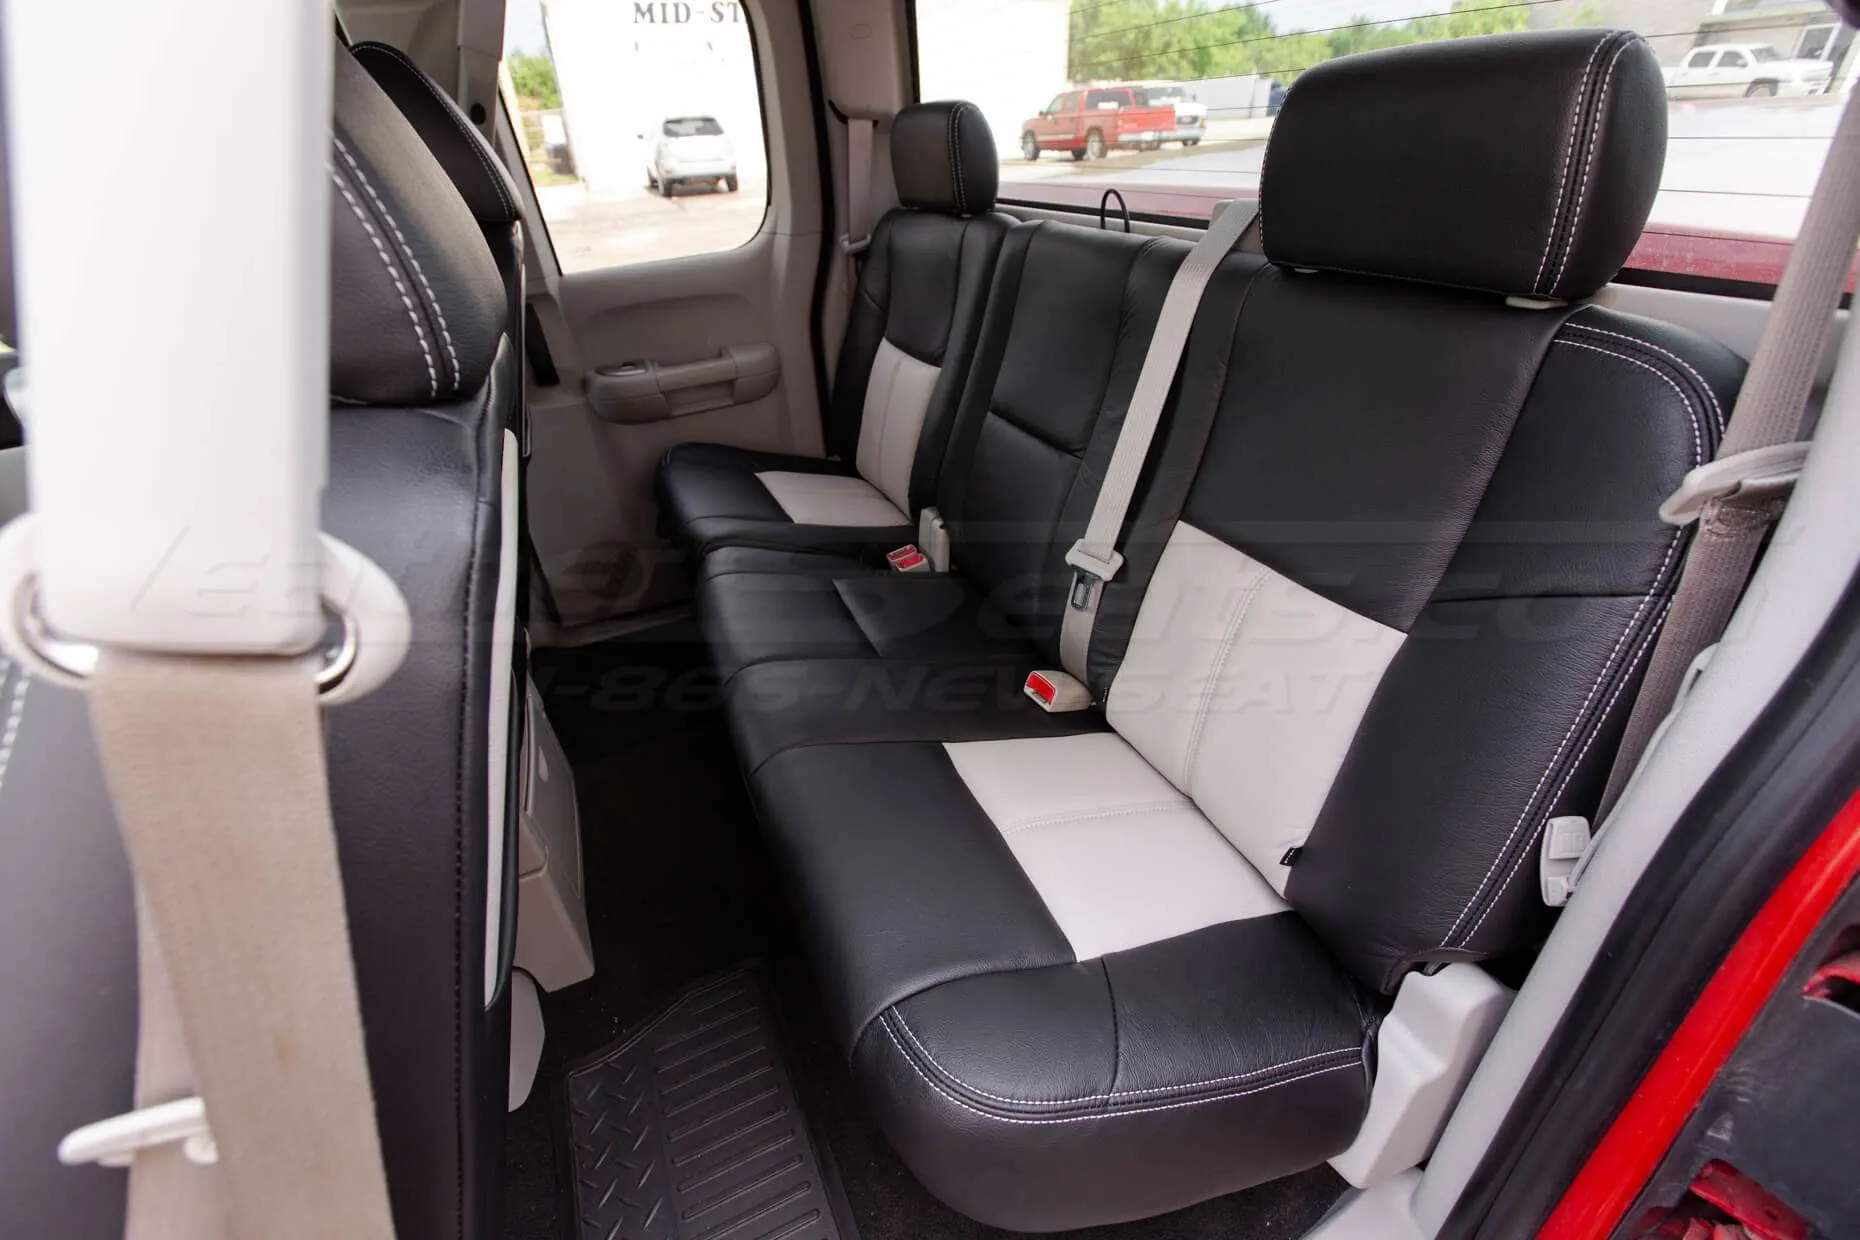 2003-2007 Chevrolet Silverado Upholstery Kit - Black & Dove Grey - Installed - Rear seats